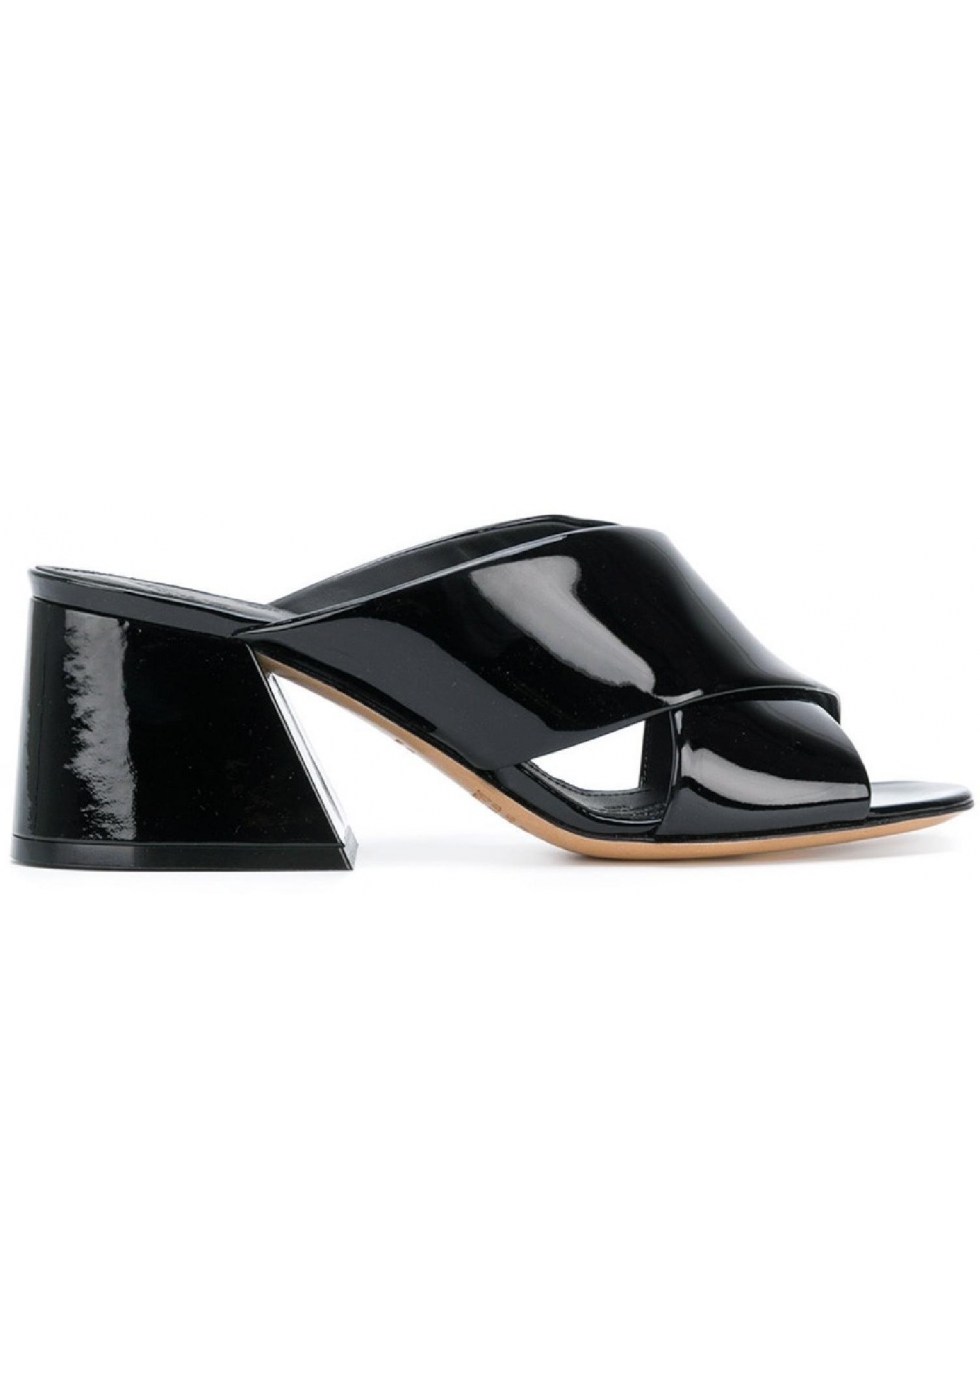 Maison Margiela high heel slide sandals in black patent leathr ...